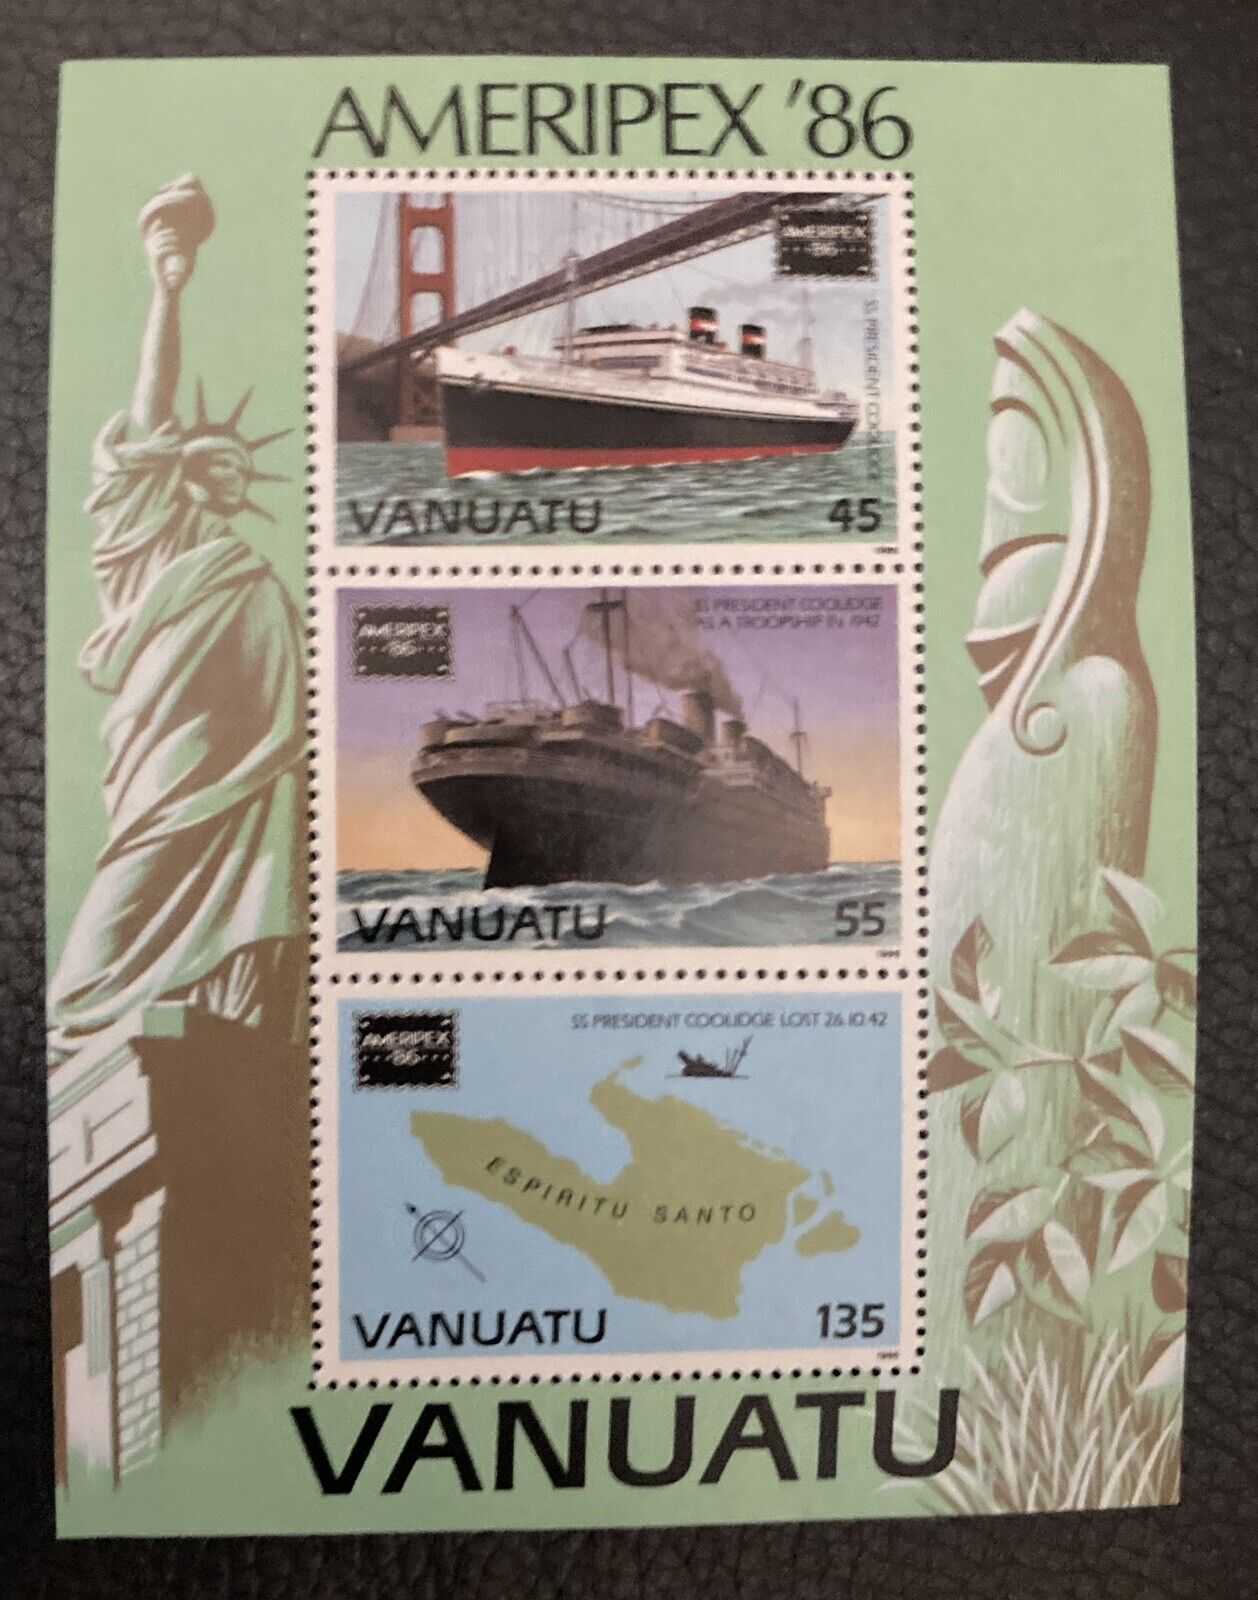 Vanuatu: 1 Souvenir Sheet #421a Ameripex 86' Mnh. Lot #03-111410